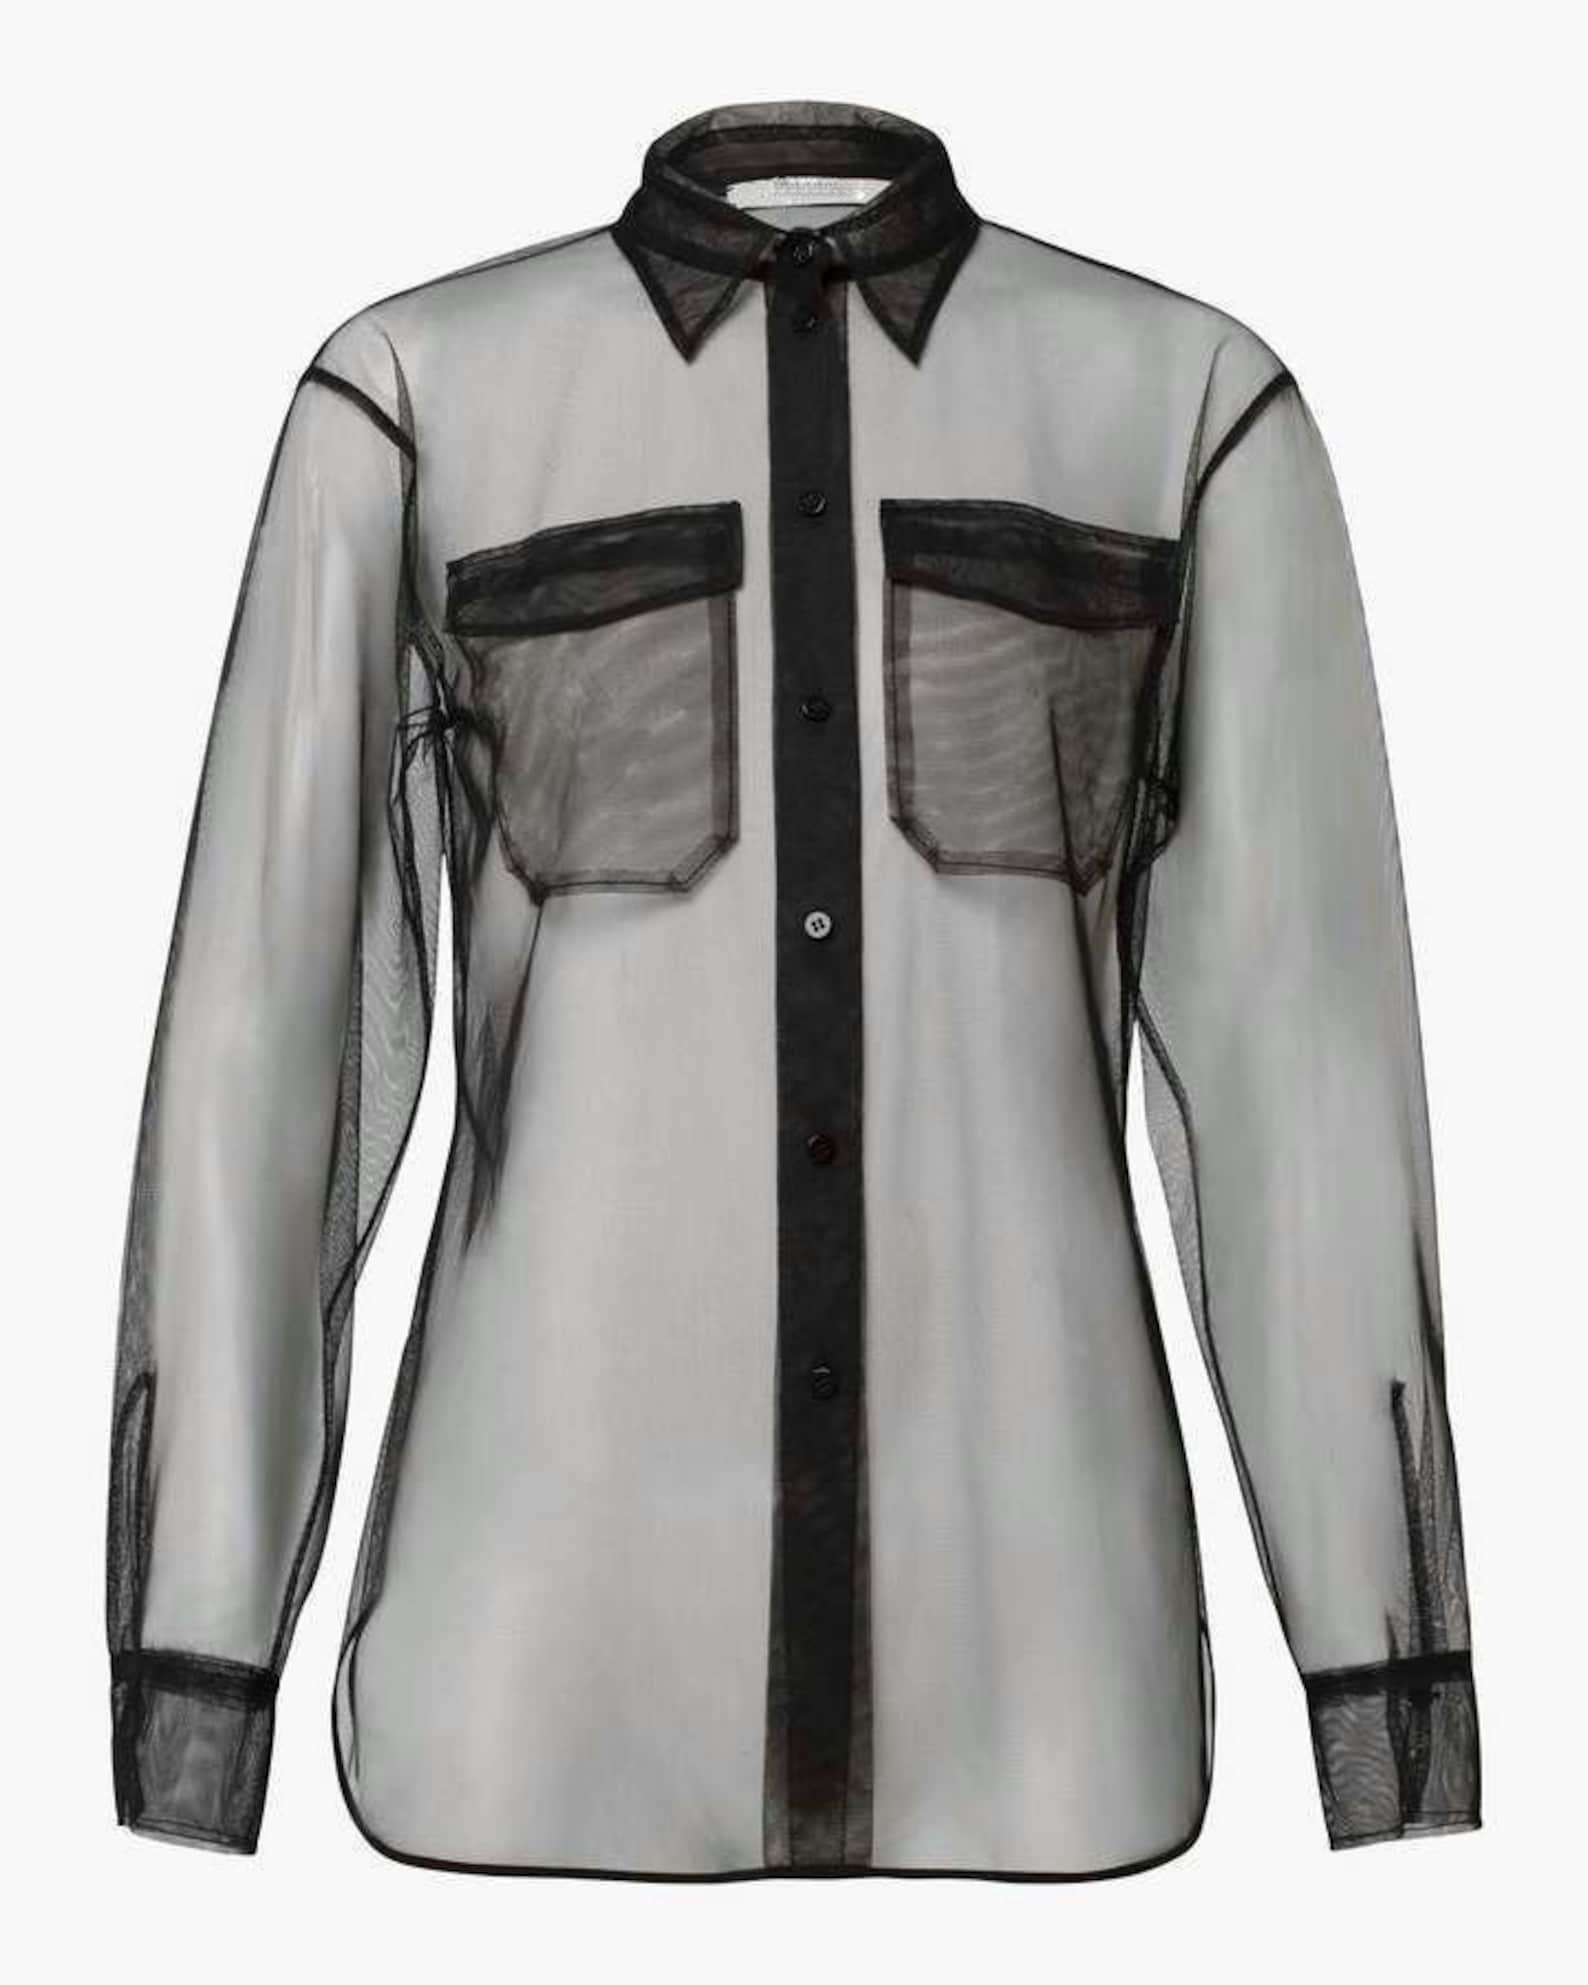 Classic Long Sleeve Silk-organza Shirt. Transparent Organza - Etsy